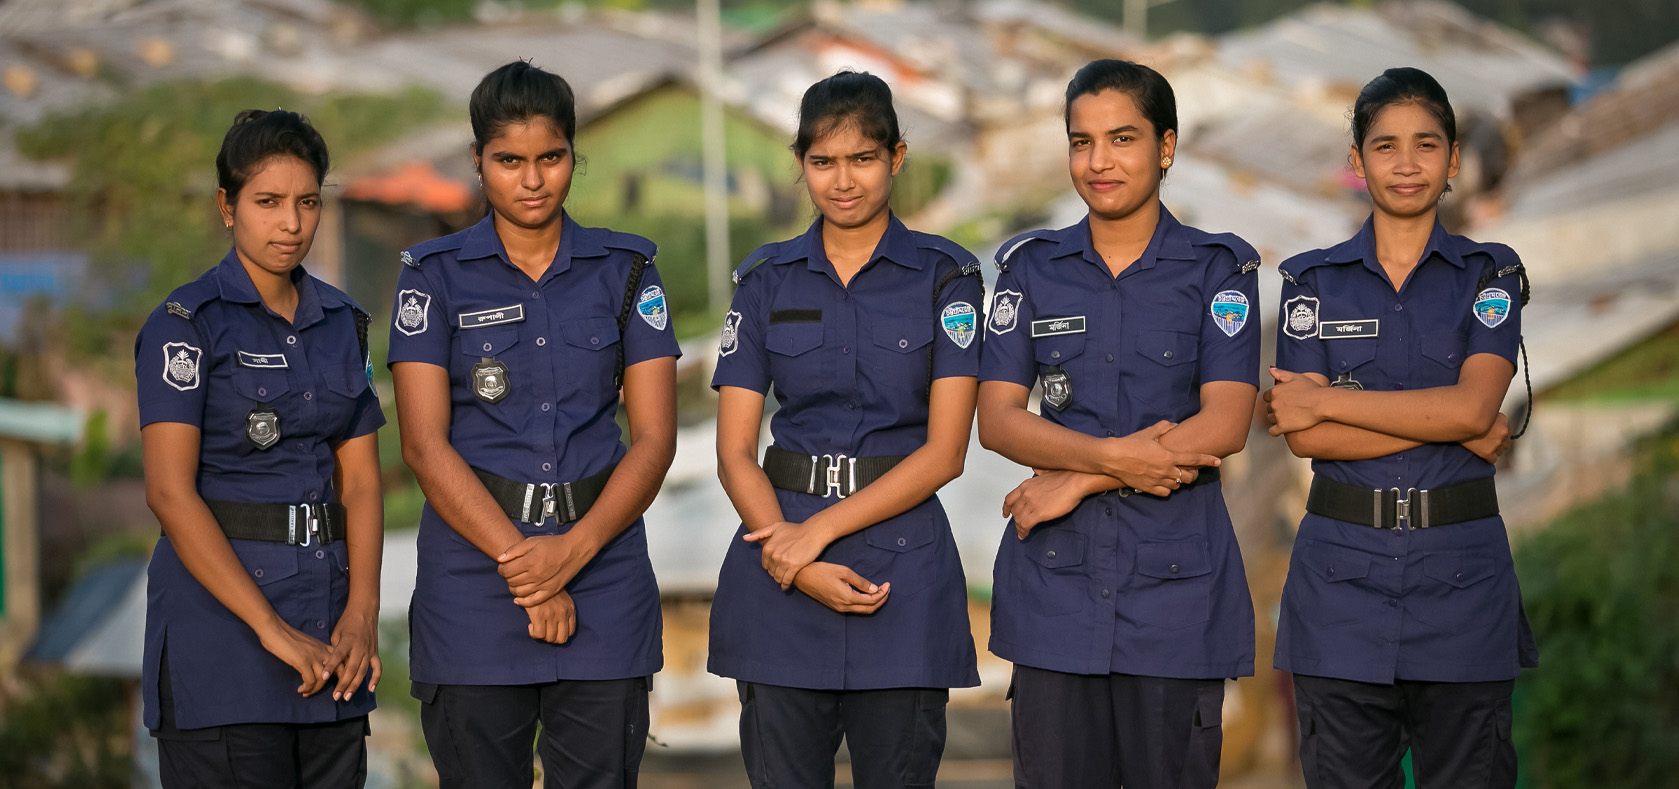 Bangladeshi women police pose for a photo at their duty station in 2019. Photo: UN Women/Allison Joyce